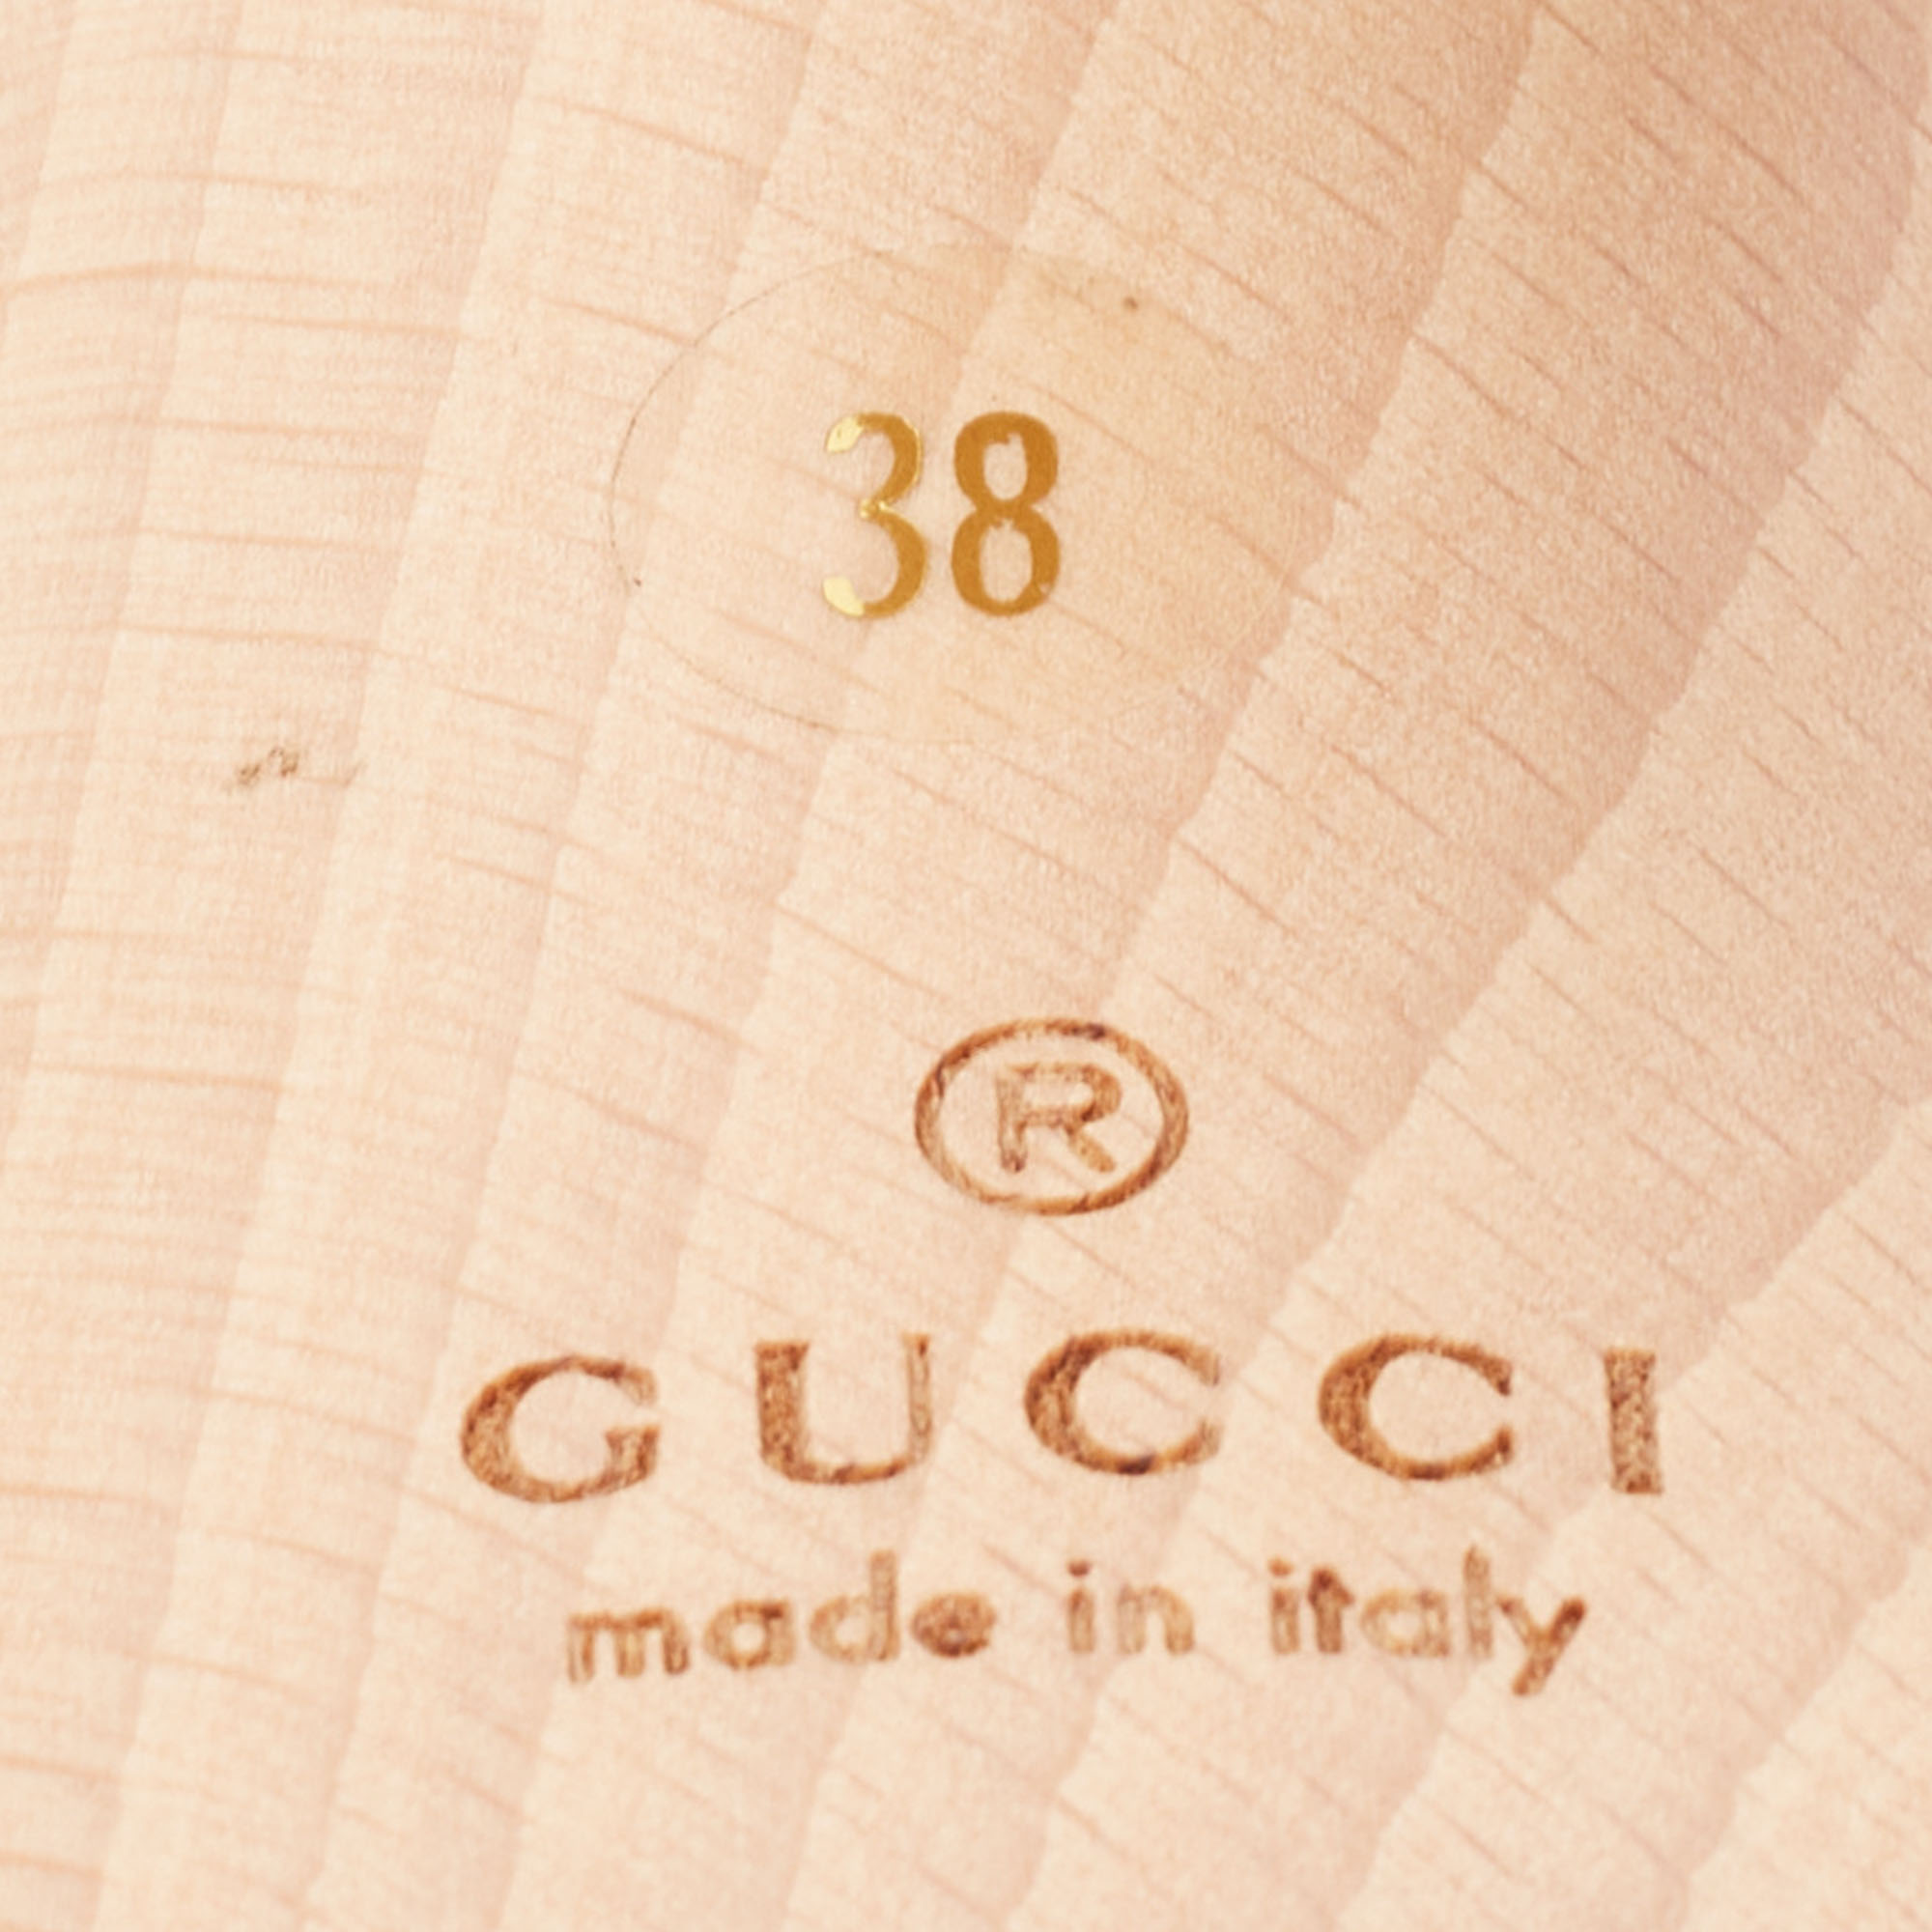 Gucci Black Patent Leather Hysteria Platform Open Toe Slide Sandals Size 38